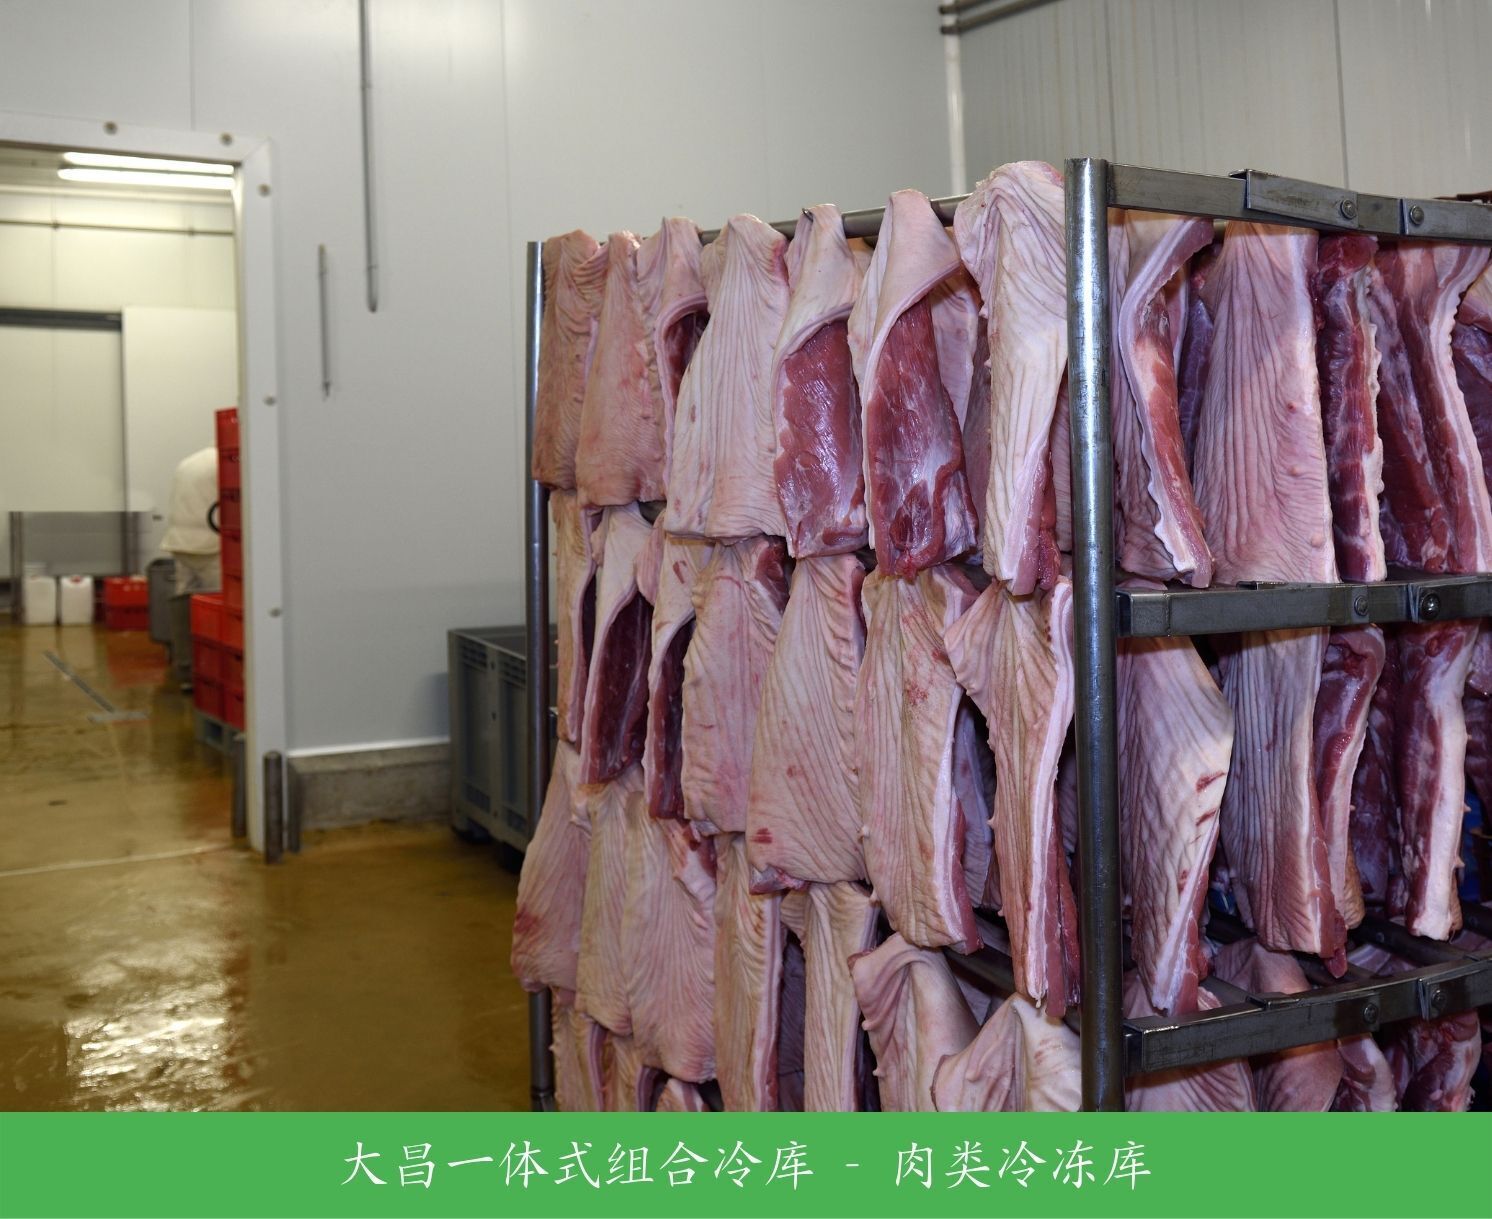 Dachang-meat-freezer-001